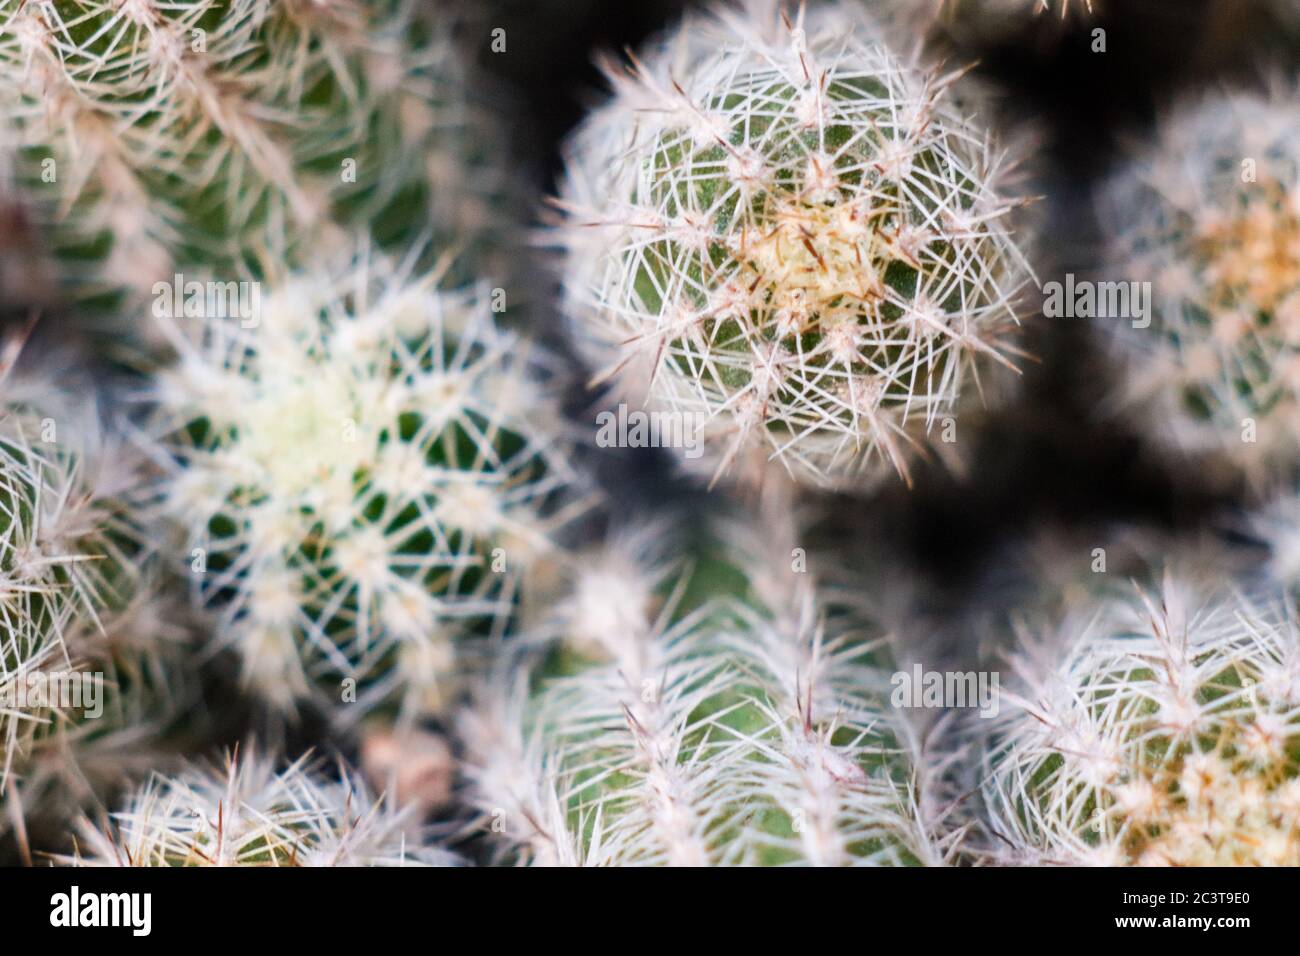 Aerial shot of a green cactus close up. Horizontal image cenital photography. Stock Photo